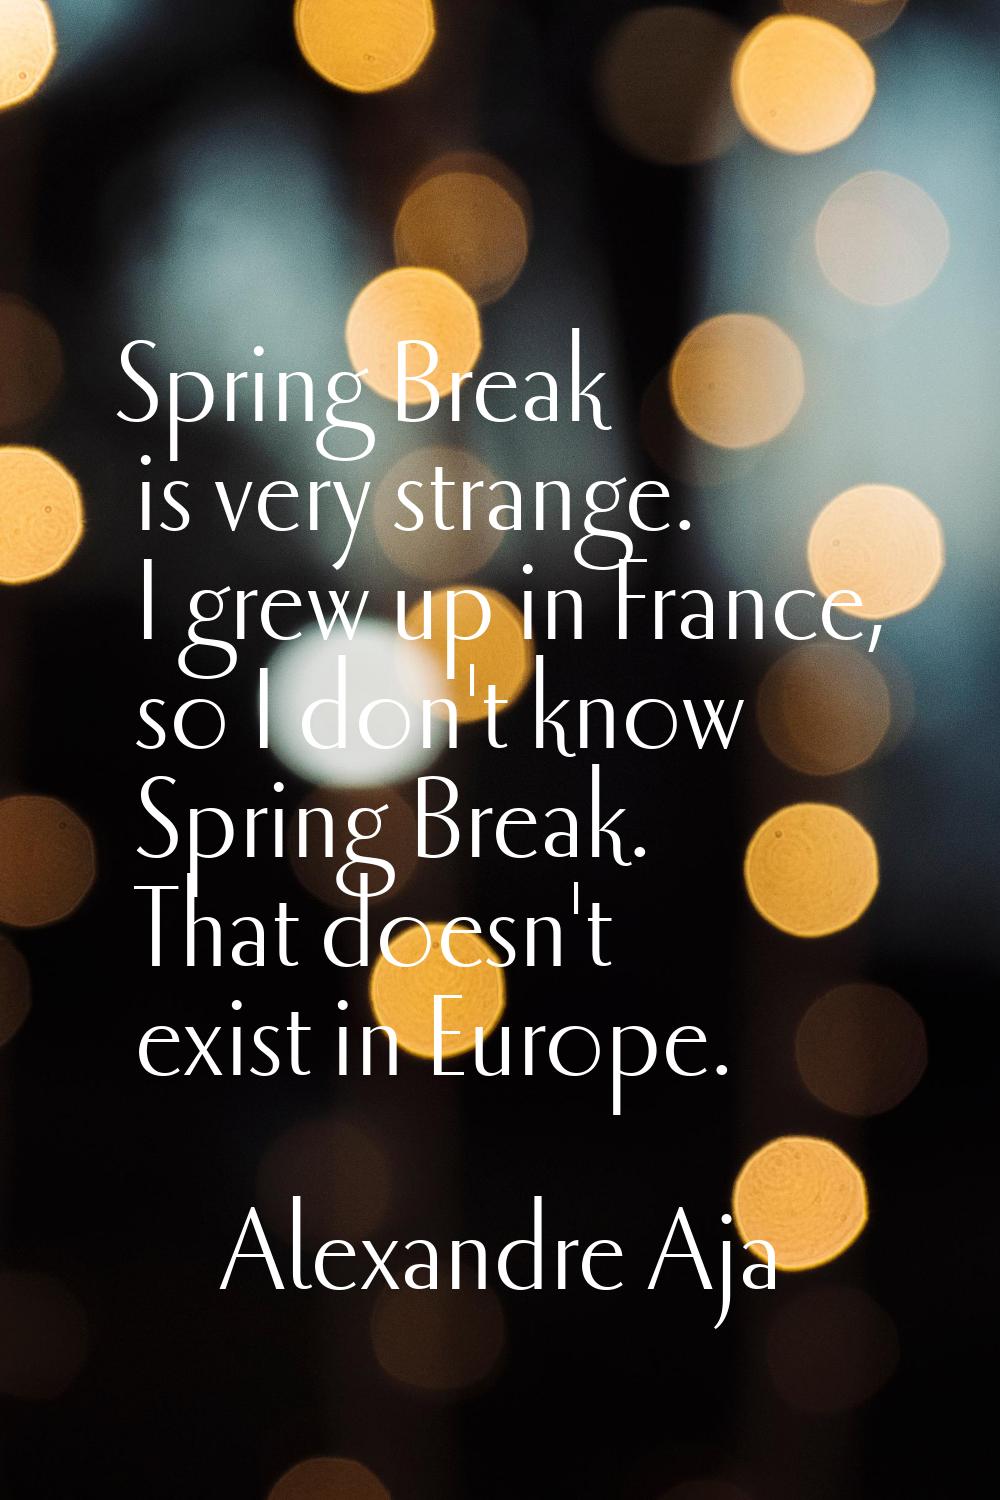 Spring Break is very strange. I grew up in France, so I don't know Spring Break. That doesn't exist